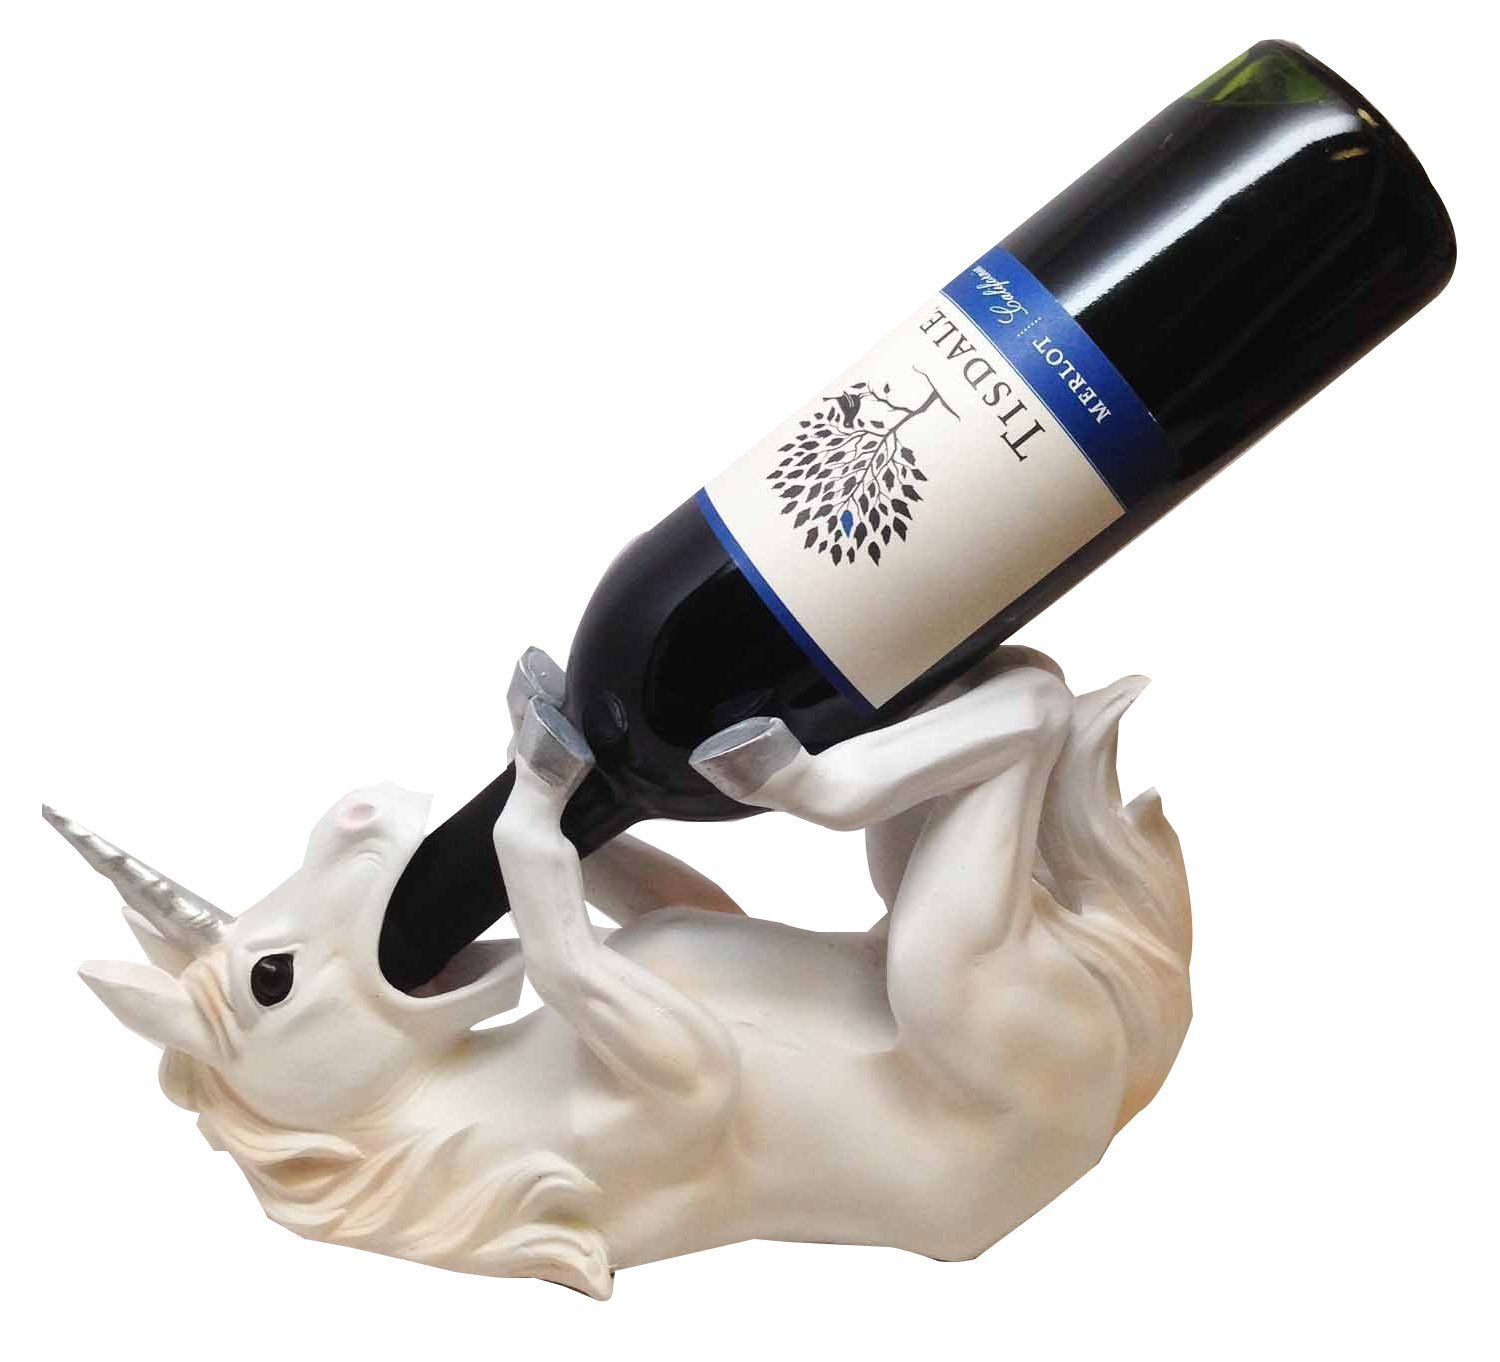 The best unicorn wine bottle holder